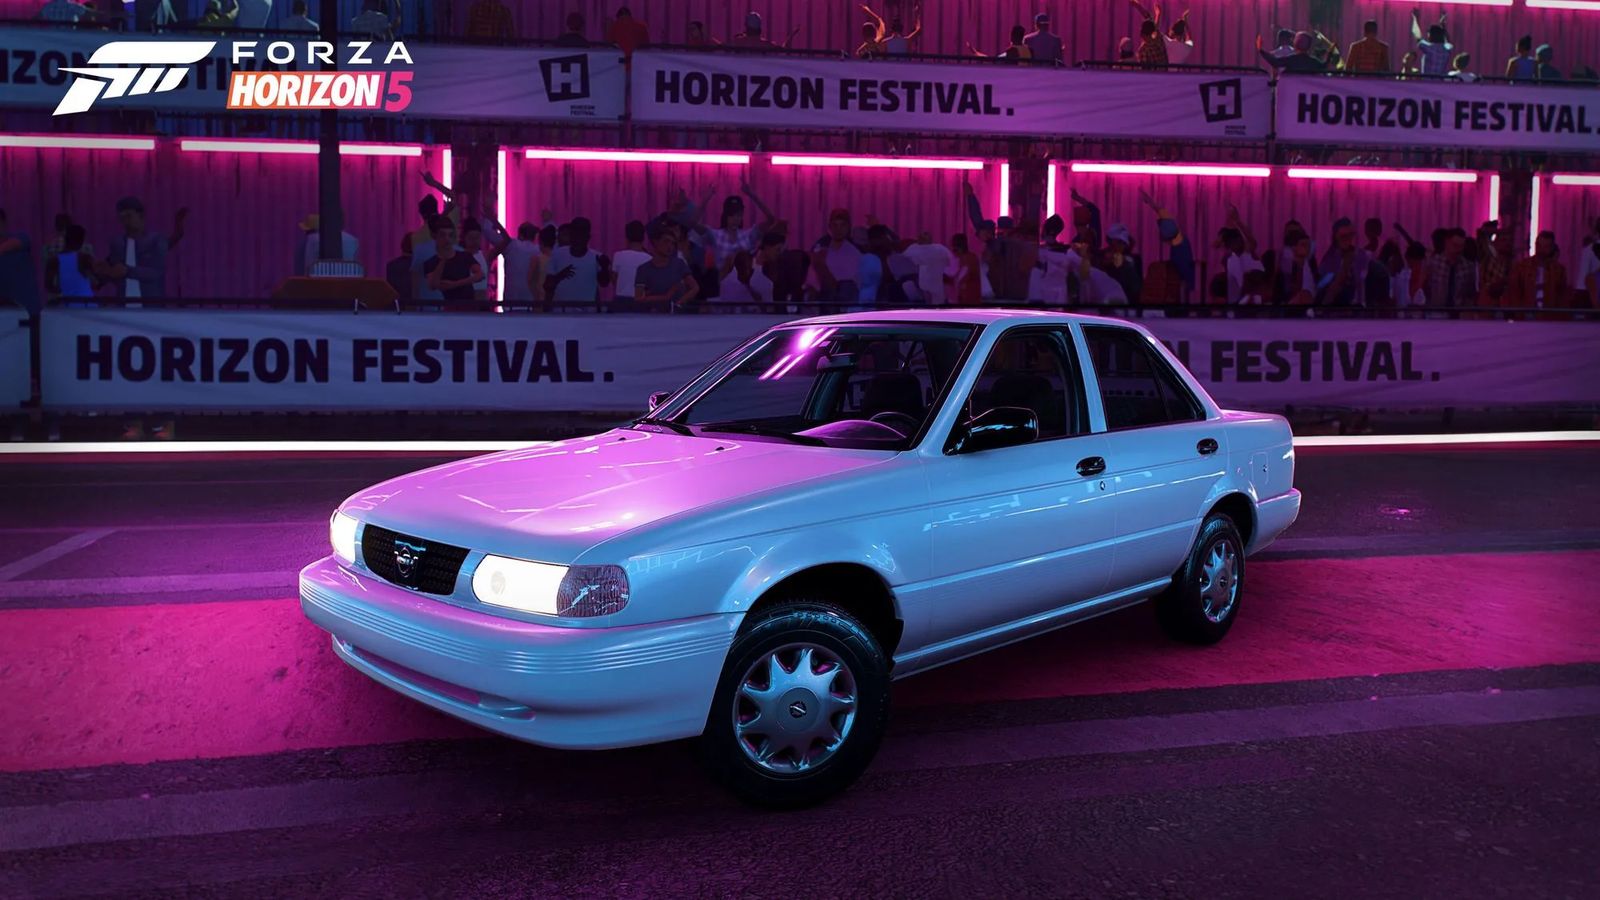 Forza Horizon 5 Nissan Tsuru most requested Forza car